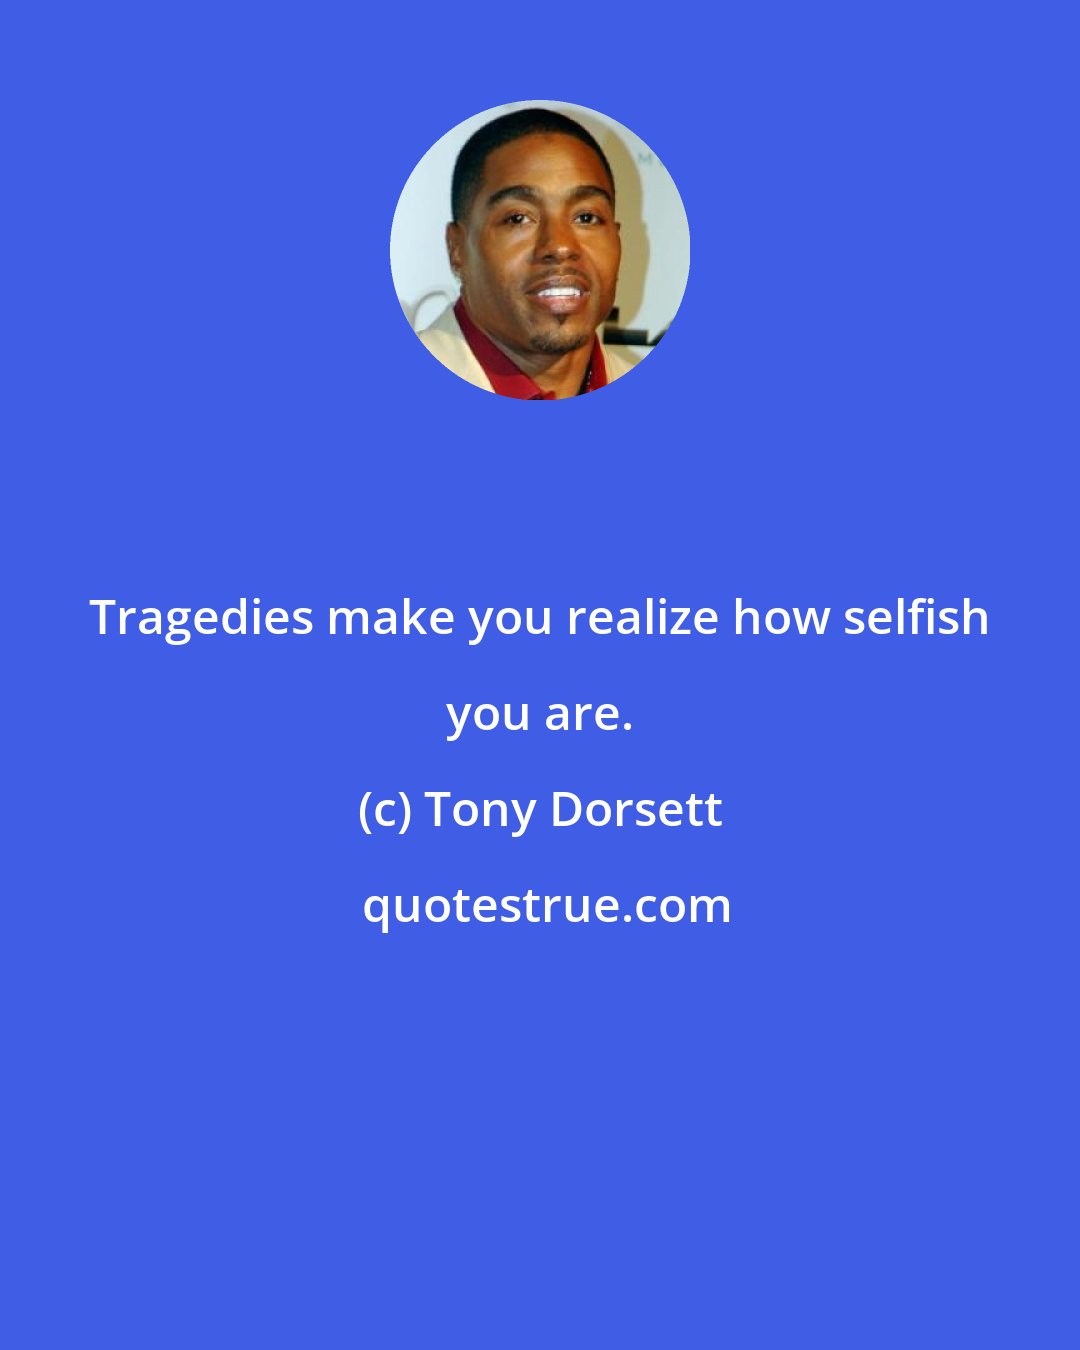 Tony Dorsett: Tragedies make you realize how selfish you are.